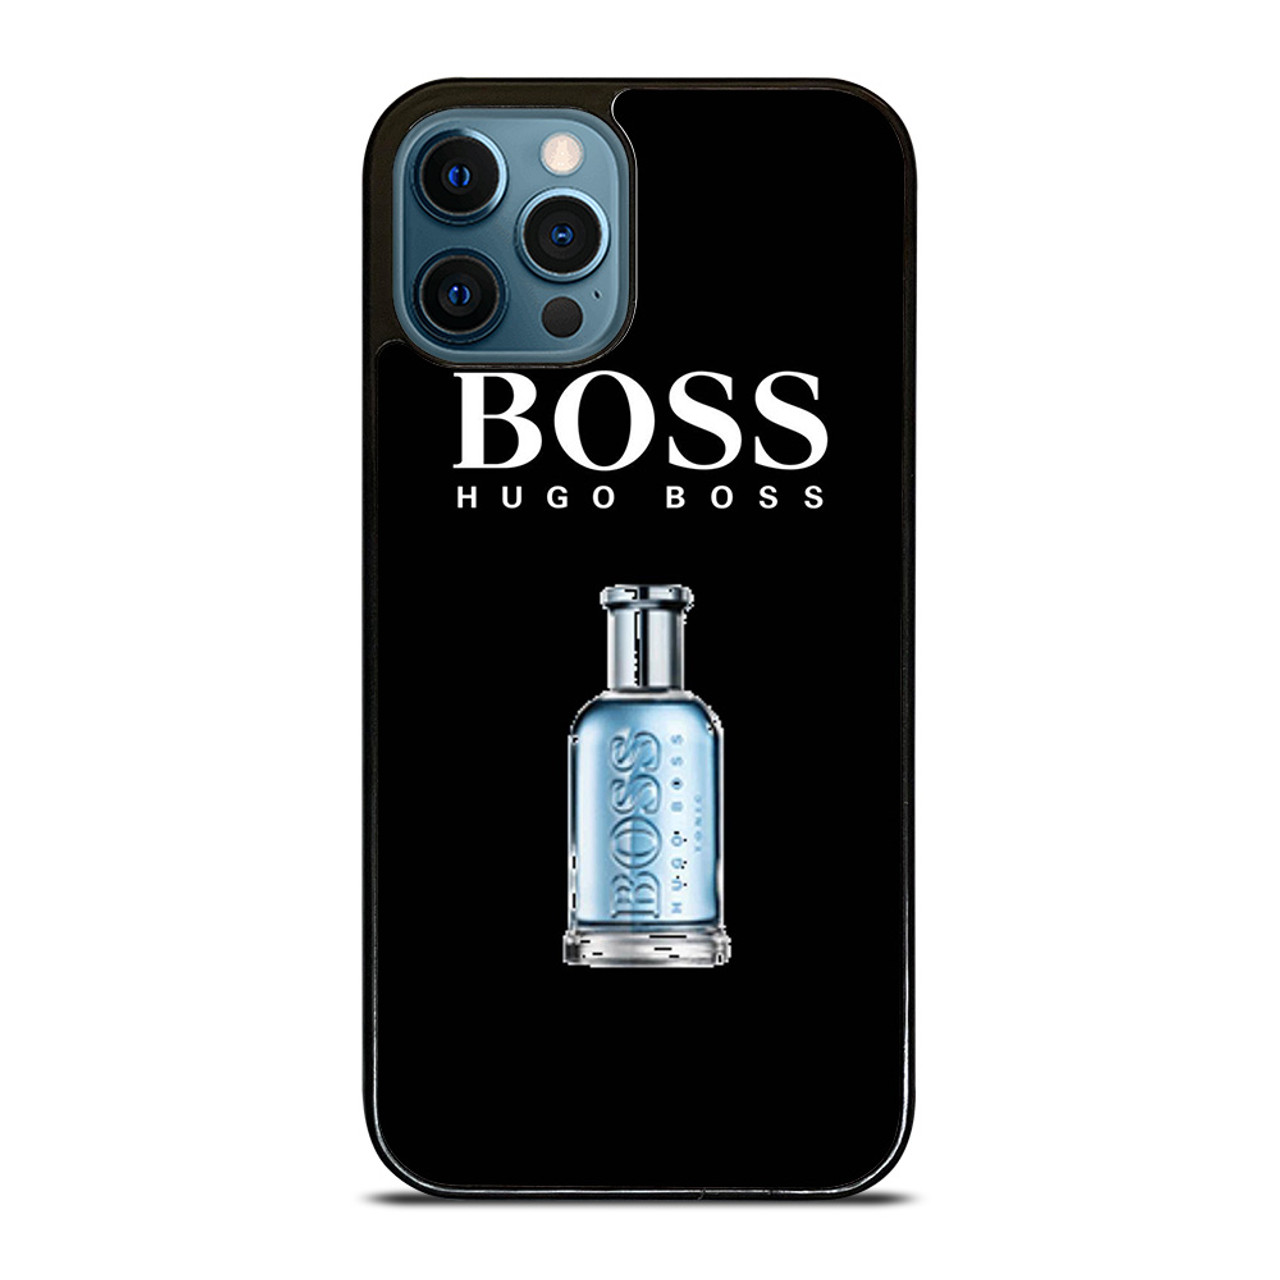 BOSS HUGO BOSS LOGO iPhone 12 Pro Case Cover